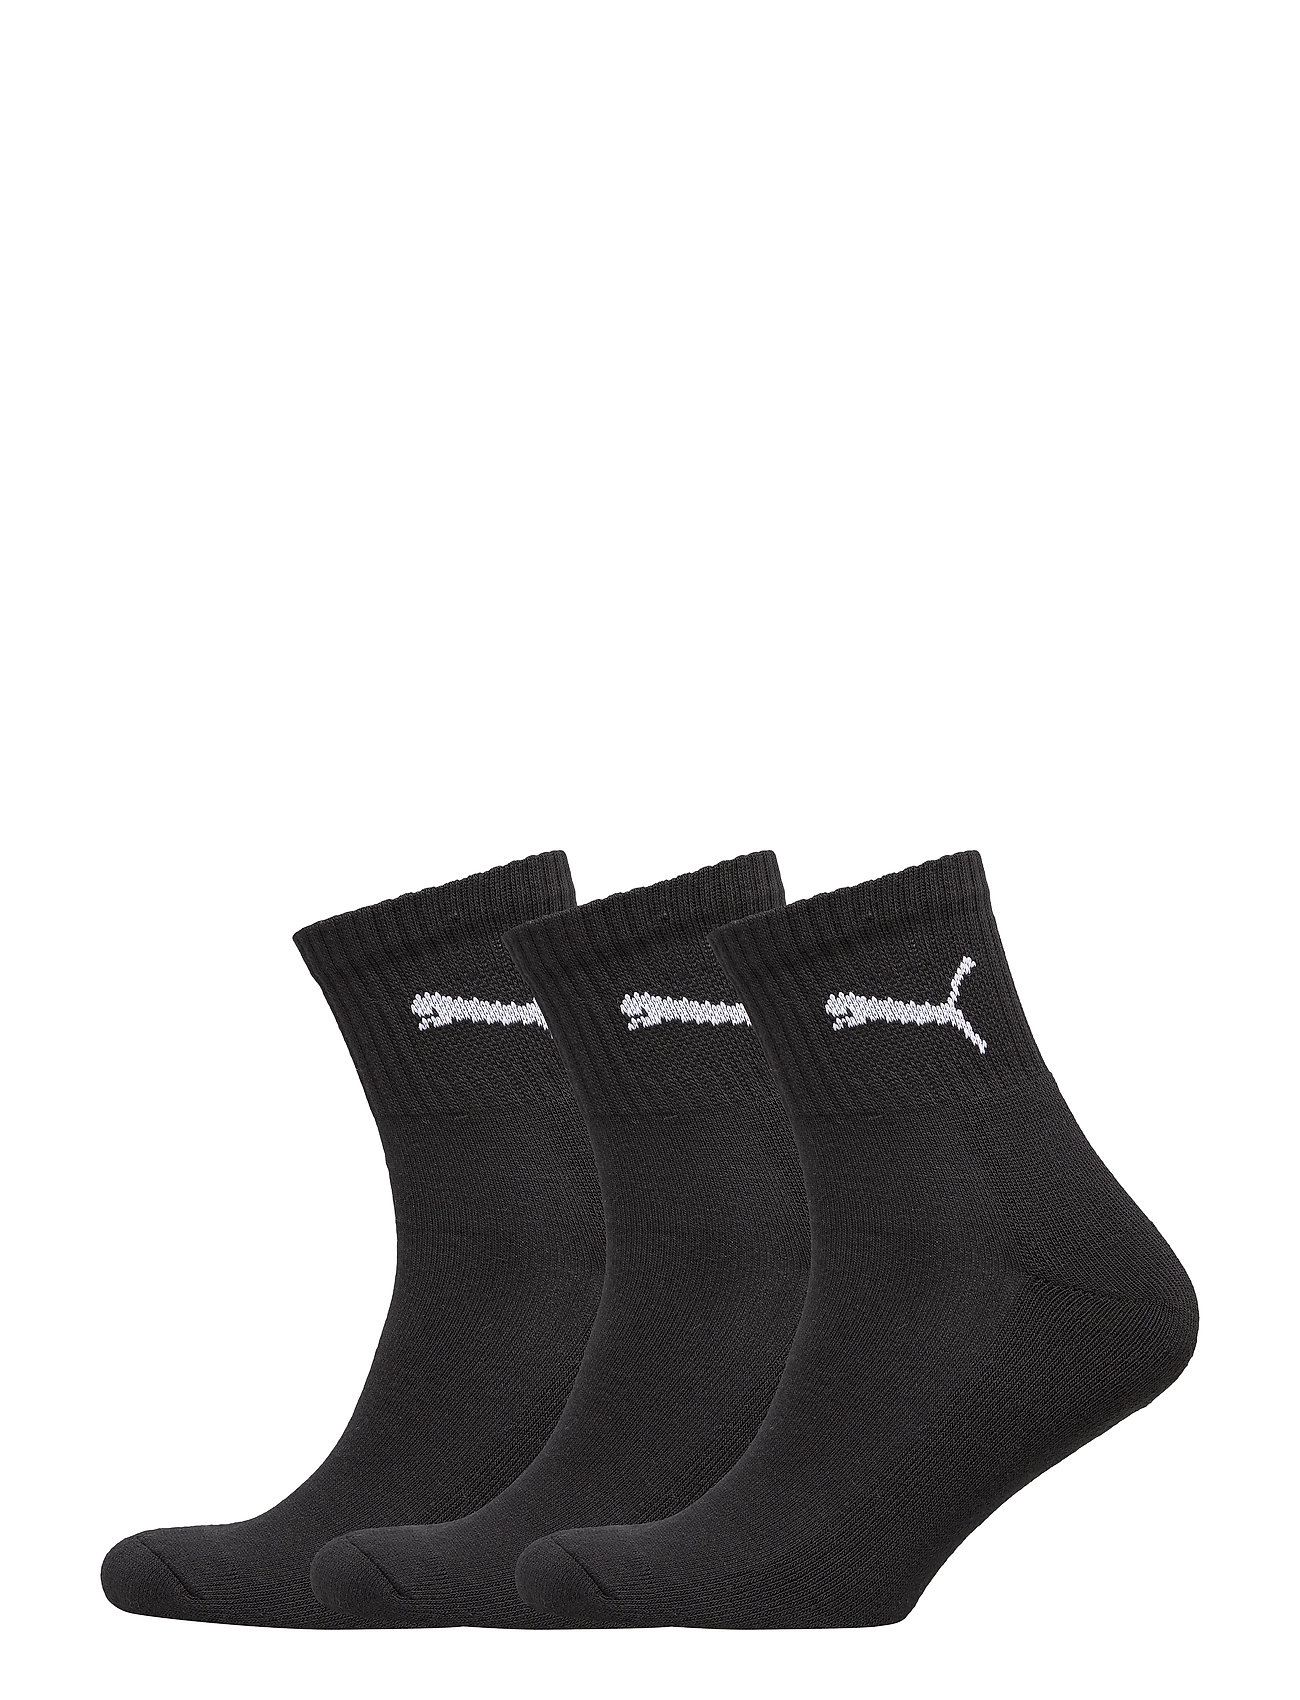 puma unisex short crew socks